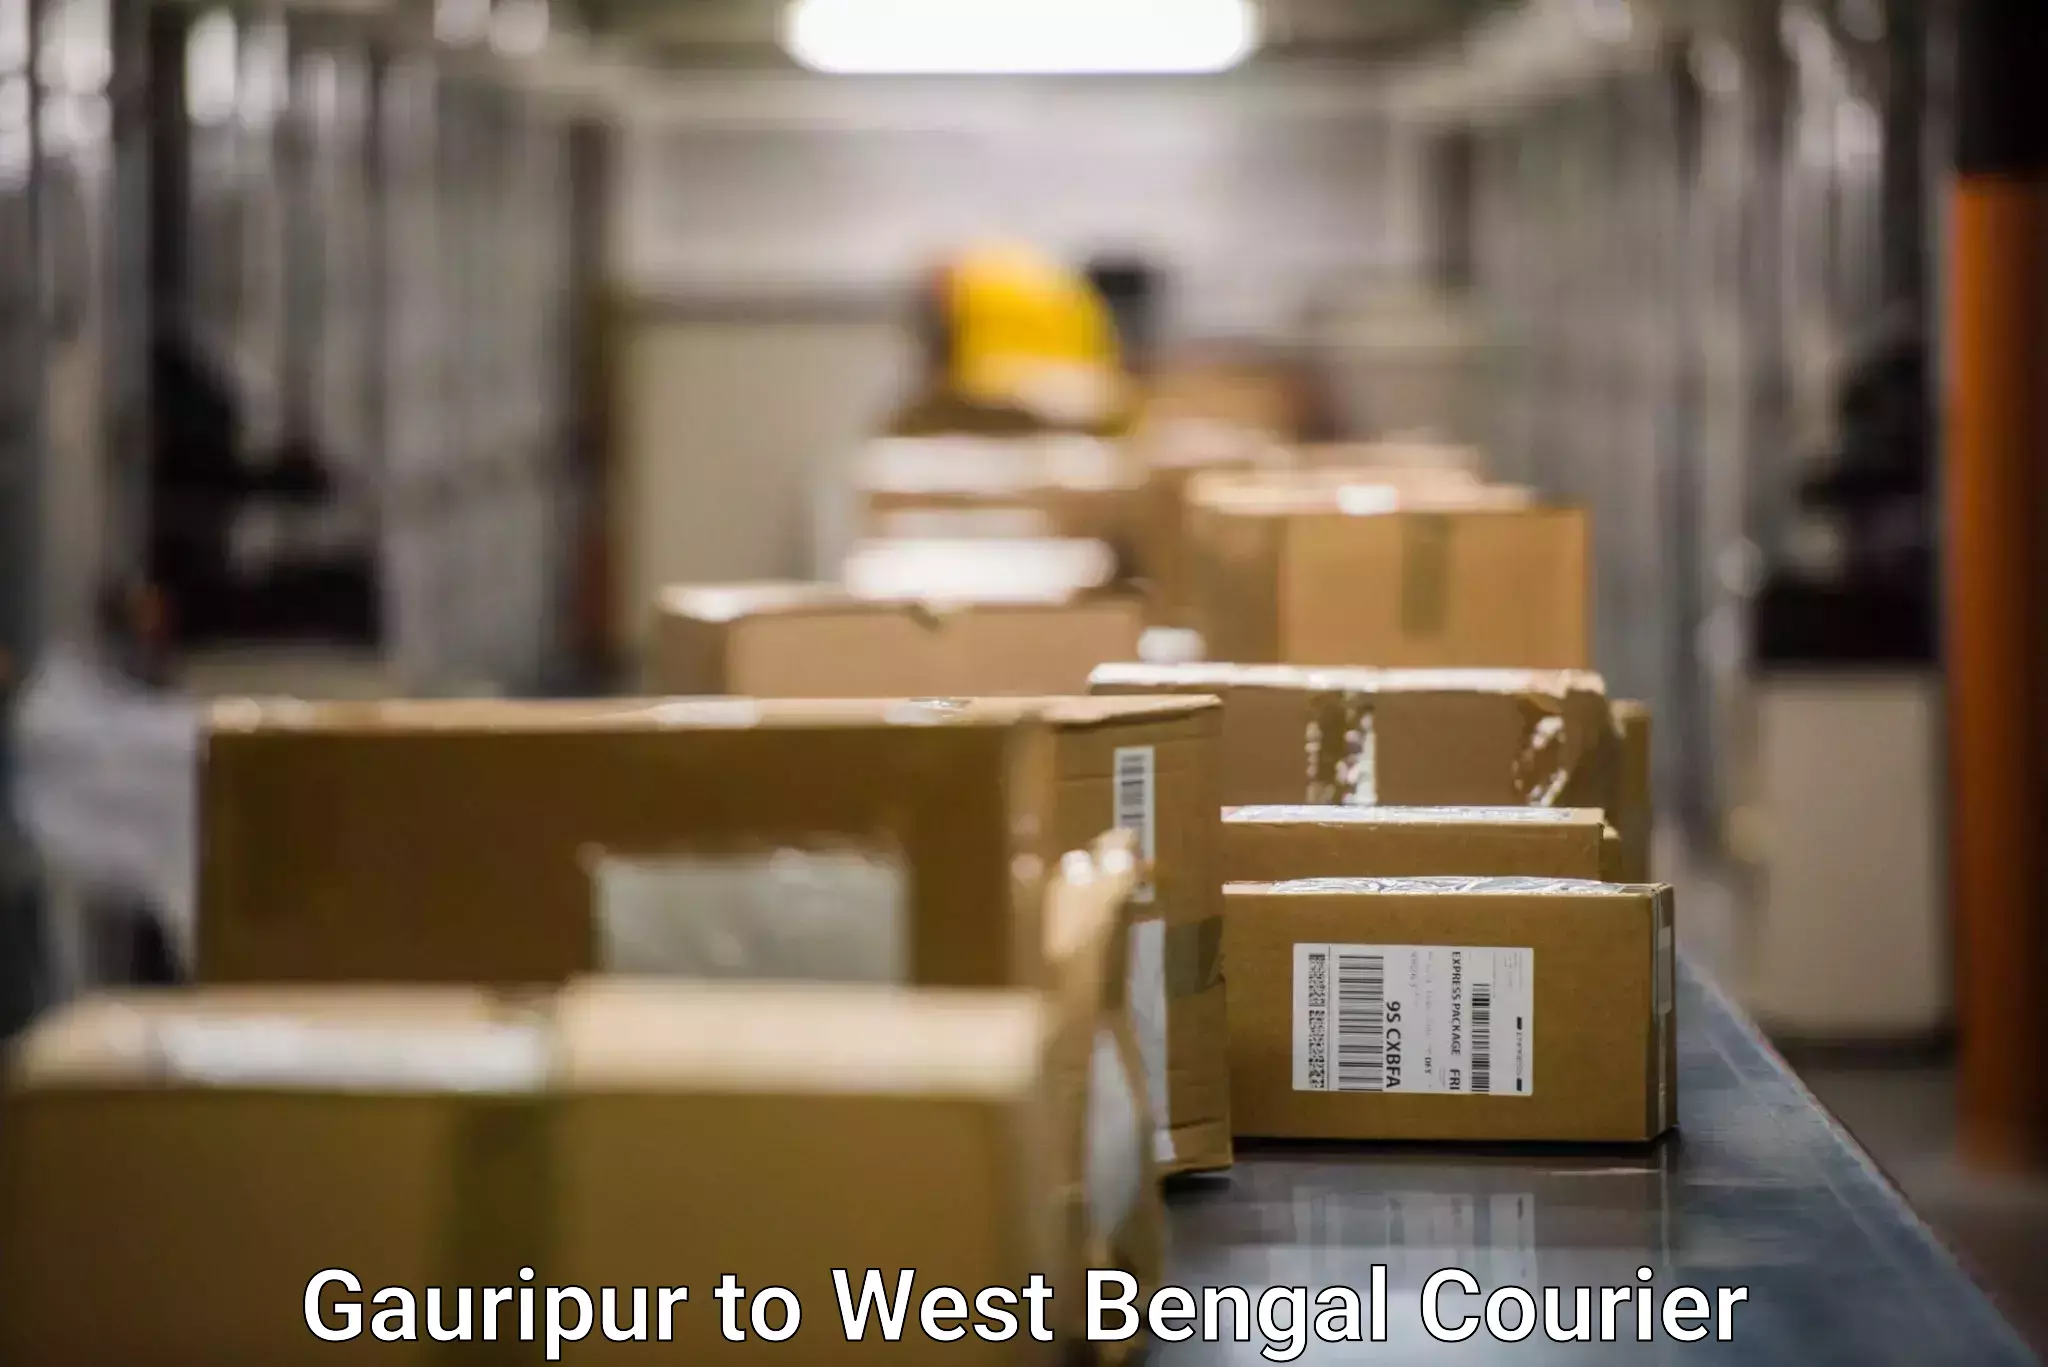 Smart shipping technology Gauripur to Kolkata Port